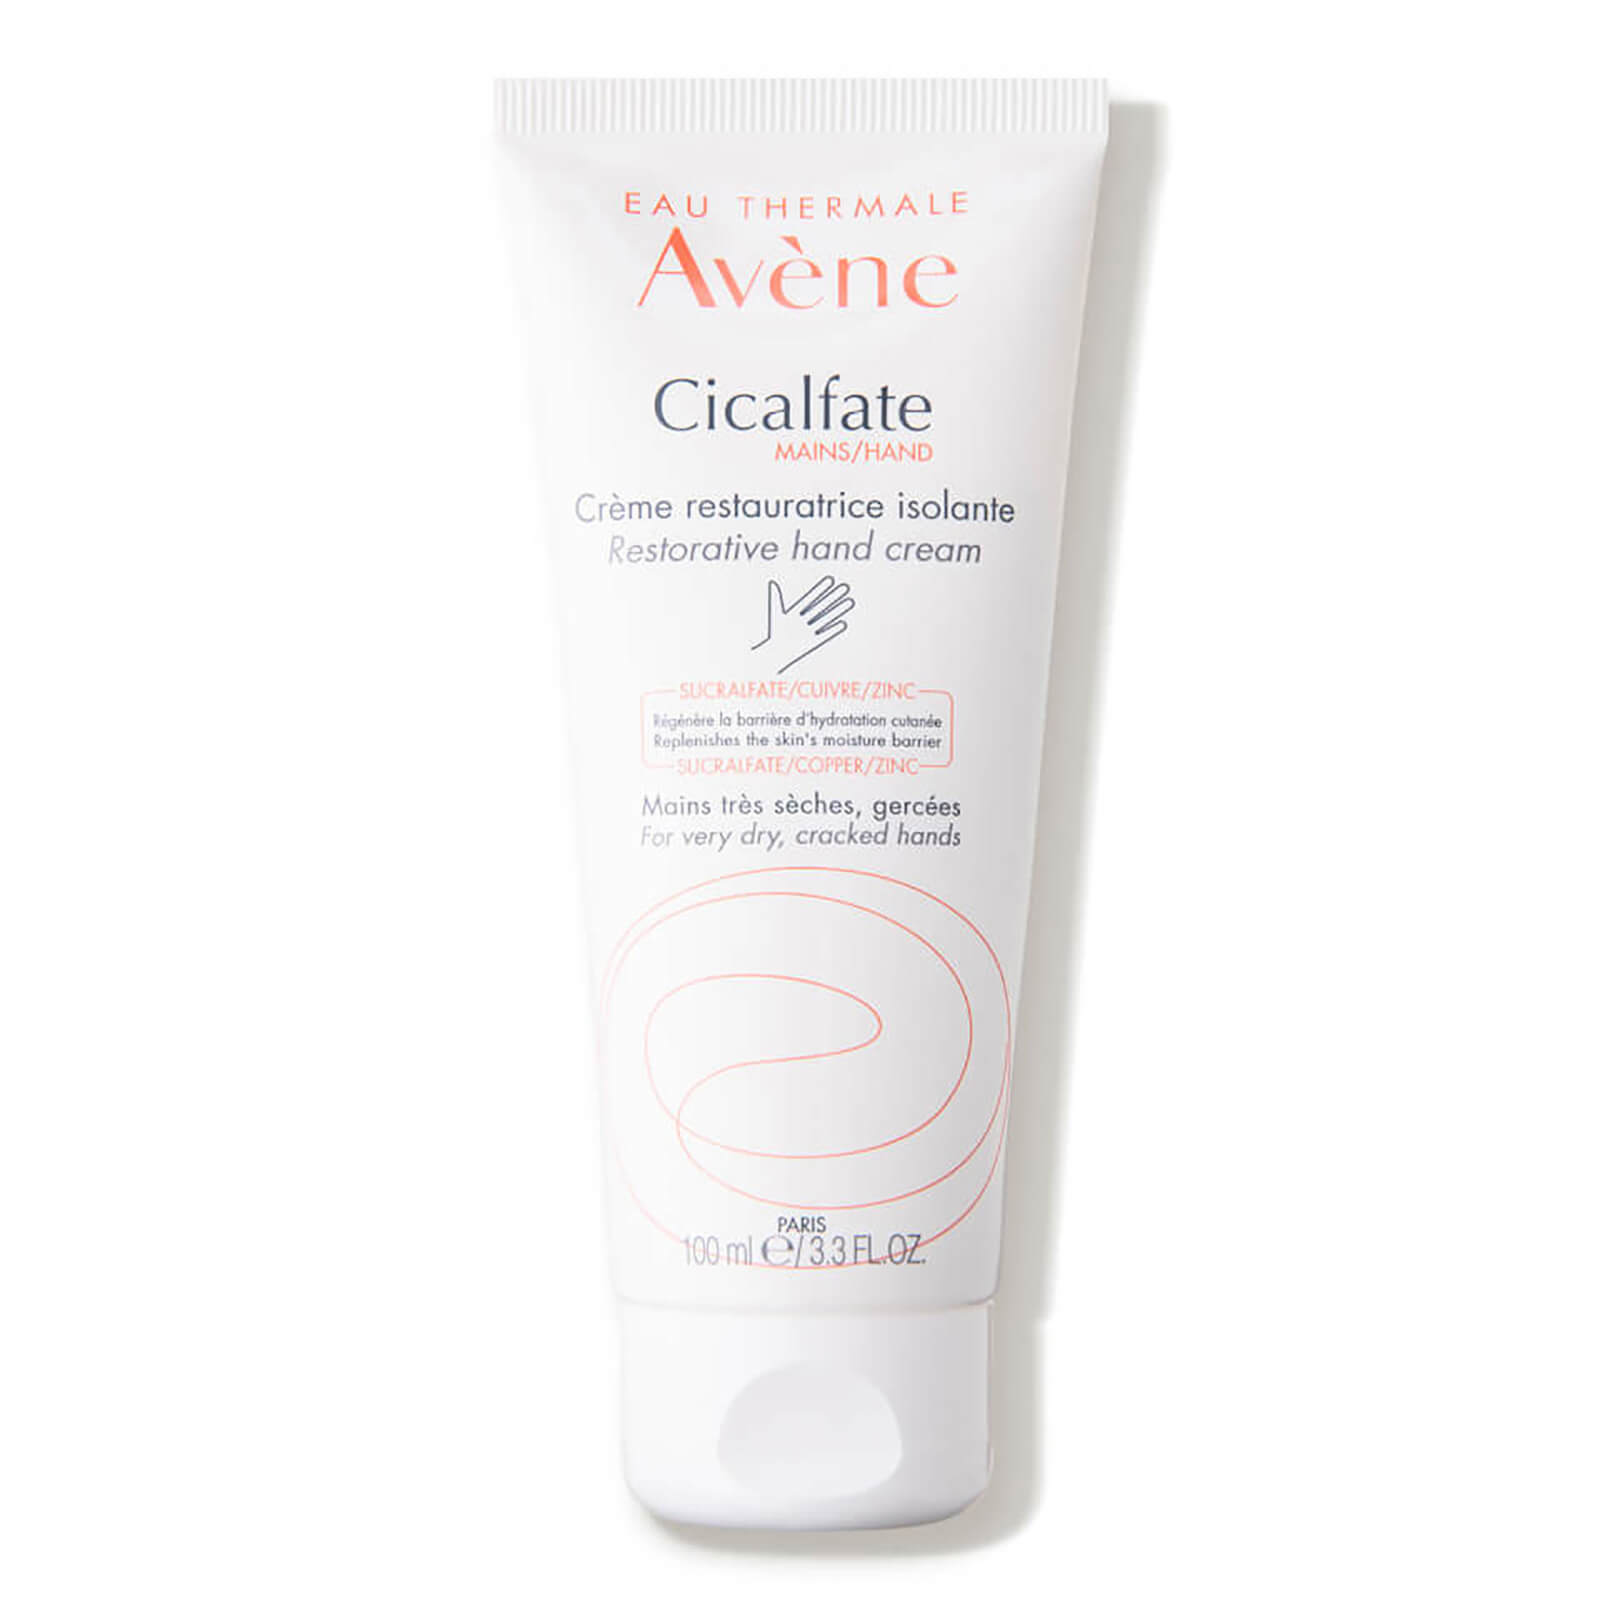 Avene Avène Cicalfate Restorative Hand Cream for Very Dry Cracked Hands 100ml